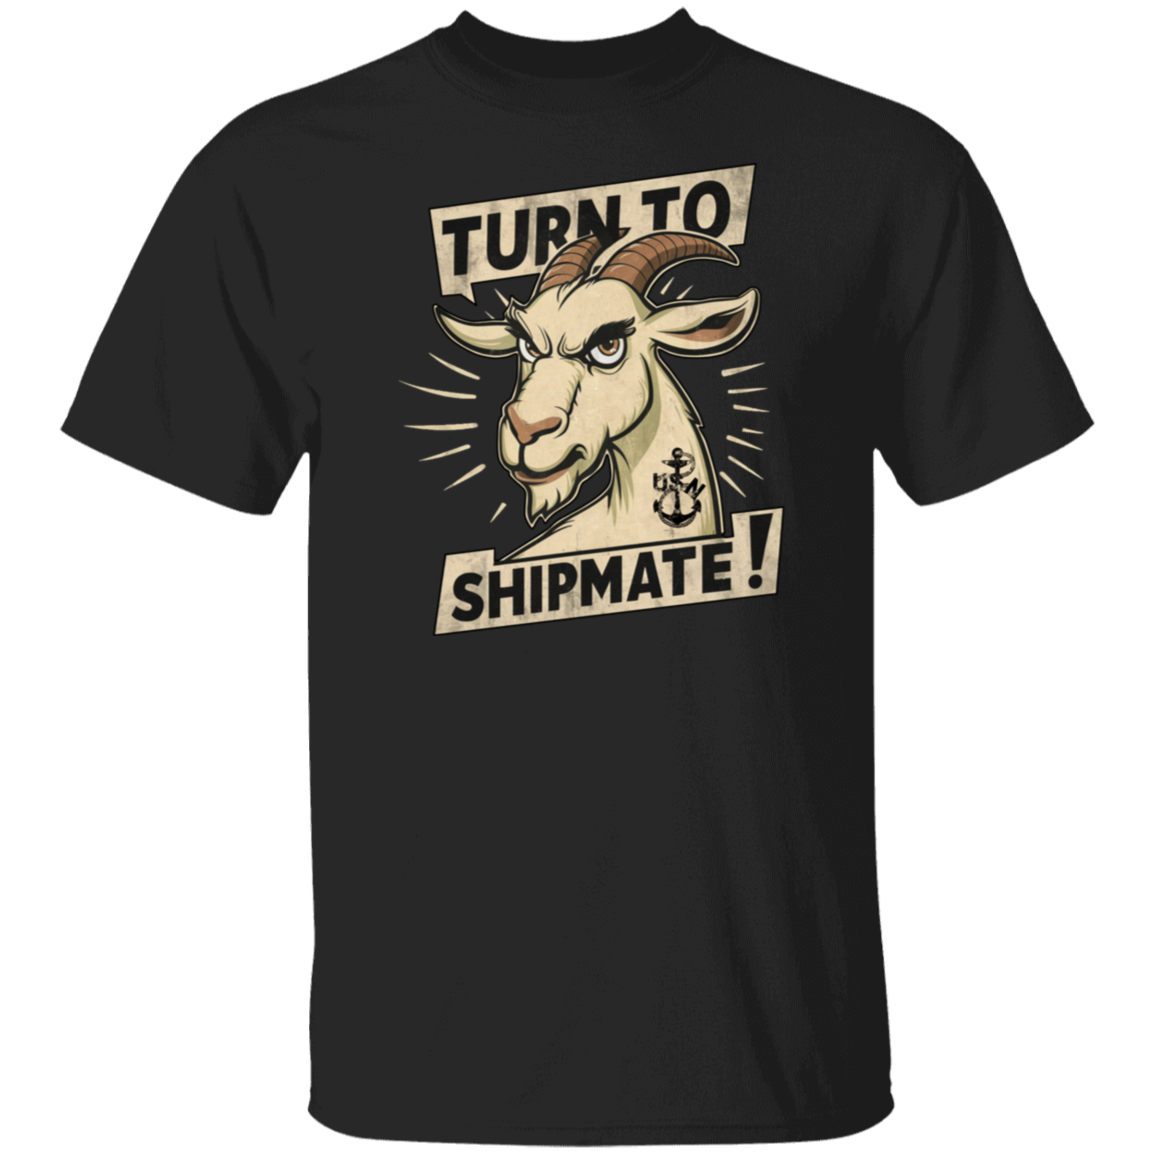 Turn To Shipmate 5.3 oz. T-Shirt